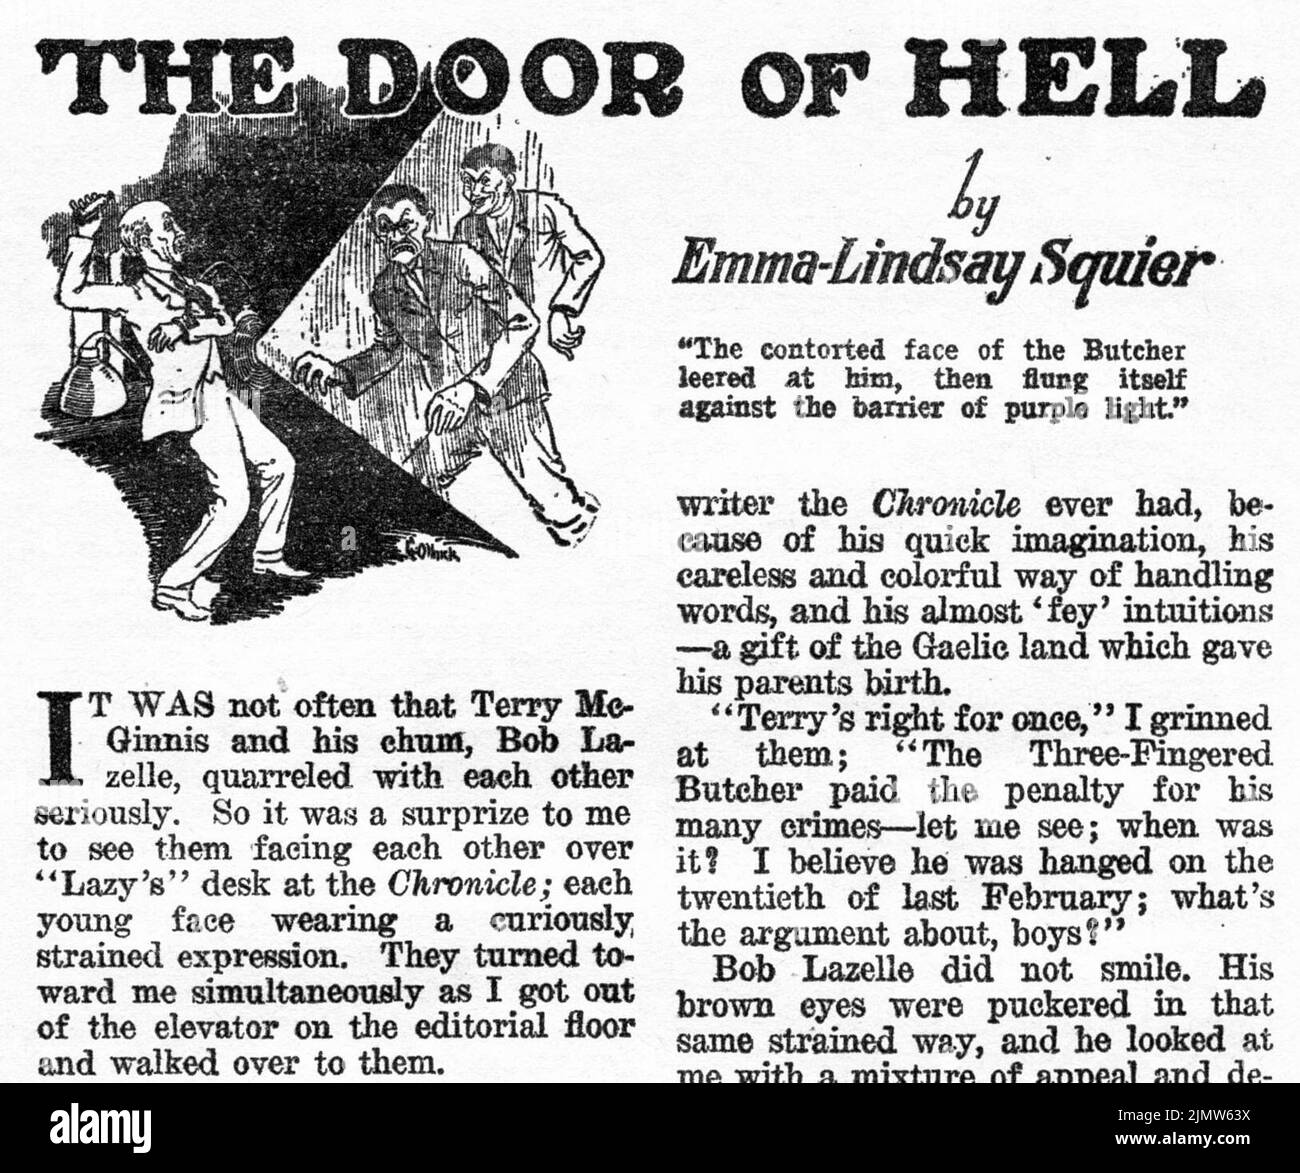 La porte de l'Enfer, par Emma-Lindsay Squier. Illustration par G. O. Olinick de Weird Tales, août 1926 Banque D'Images